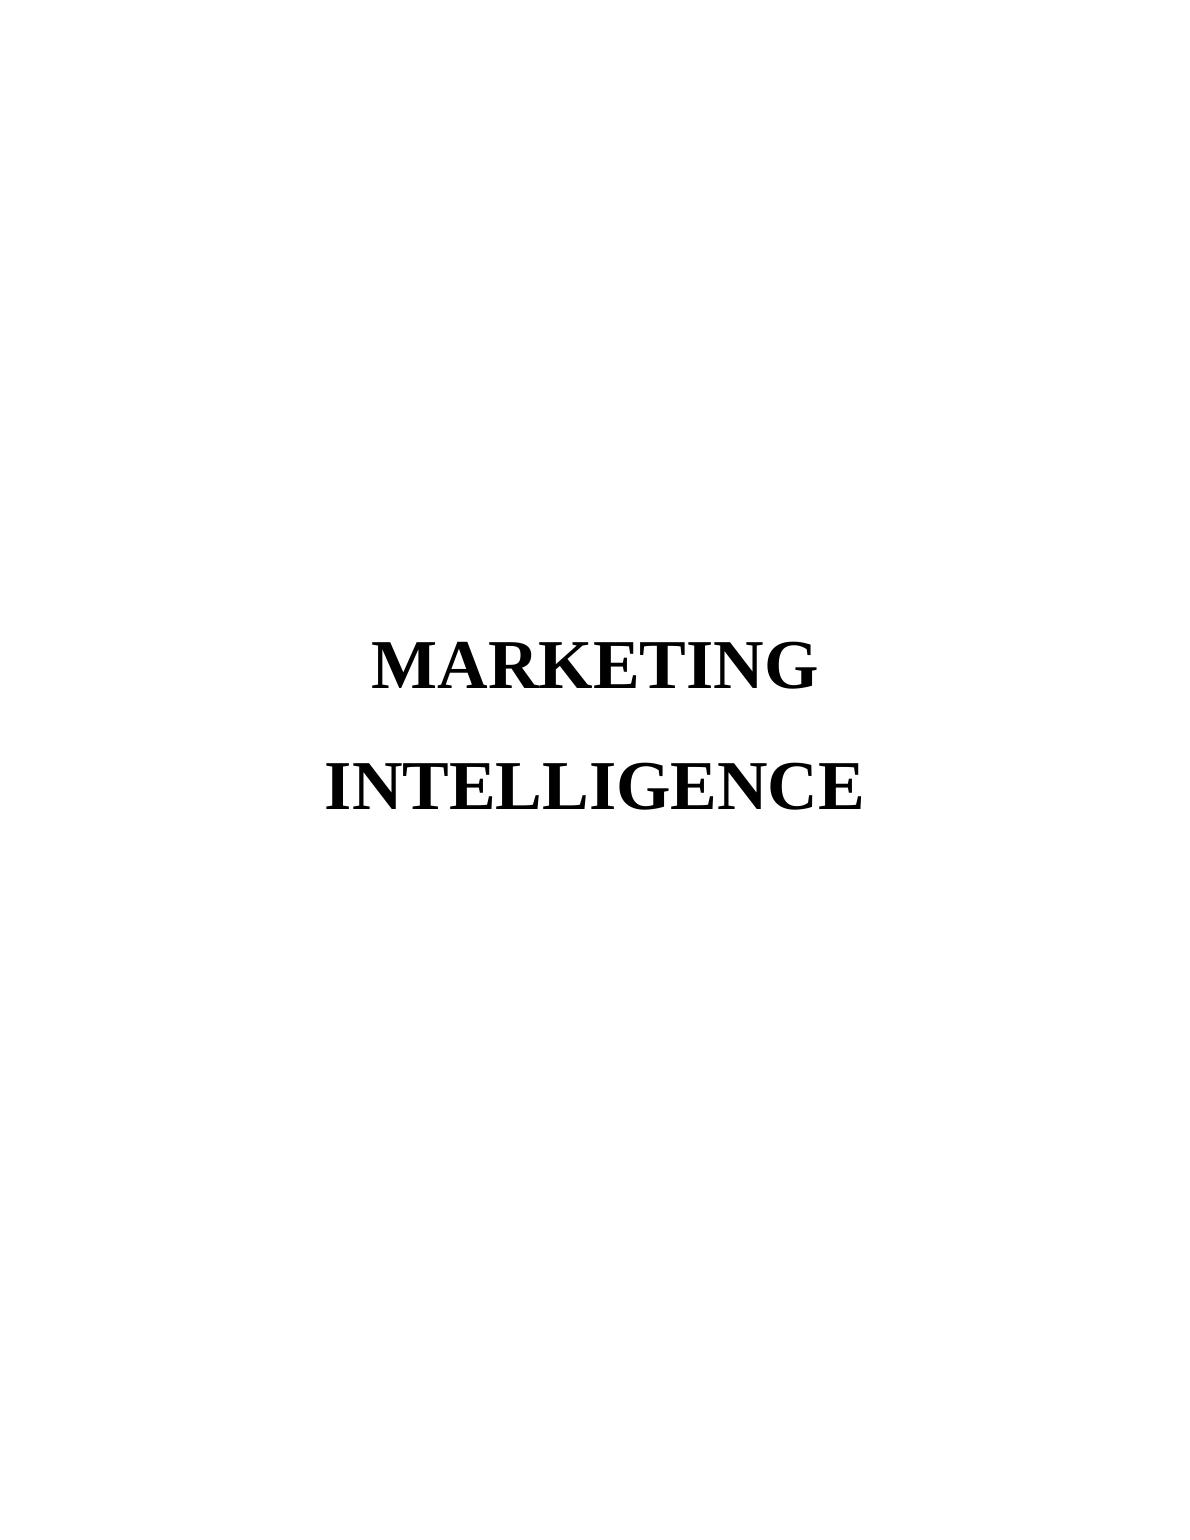 Marketing Intelligence Assignment Solution_1